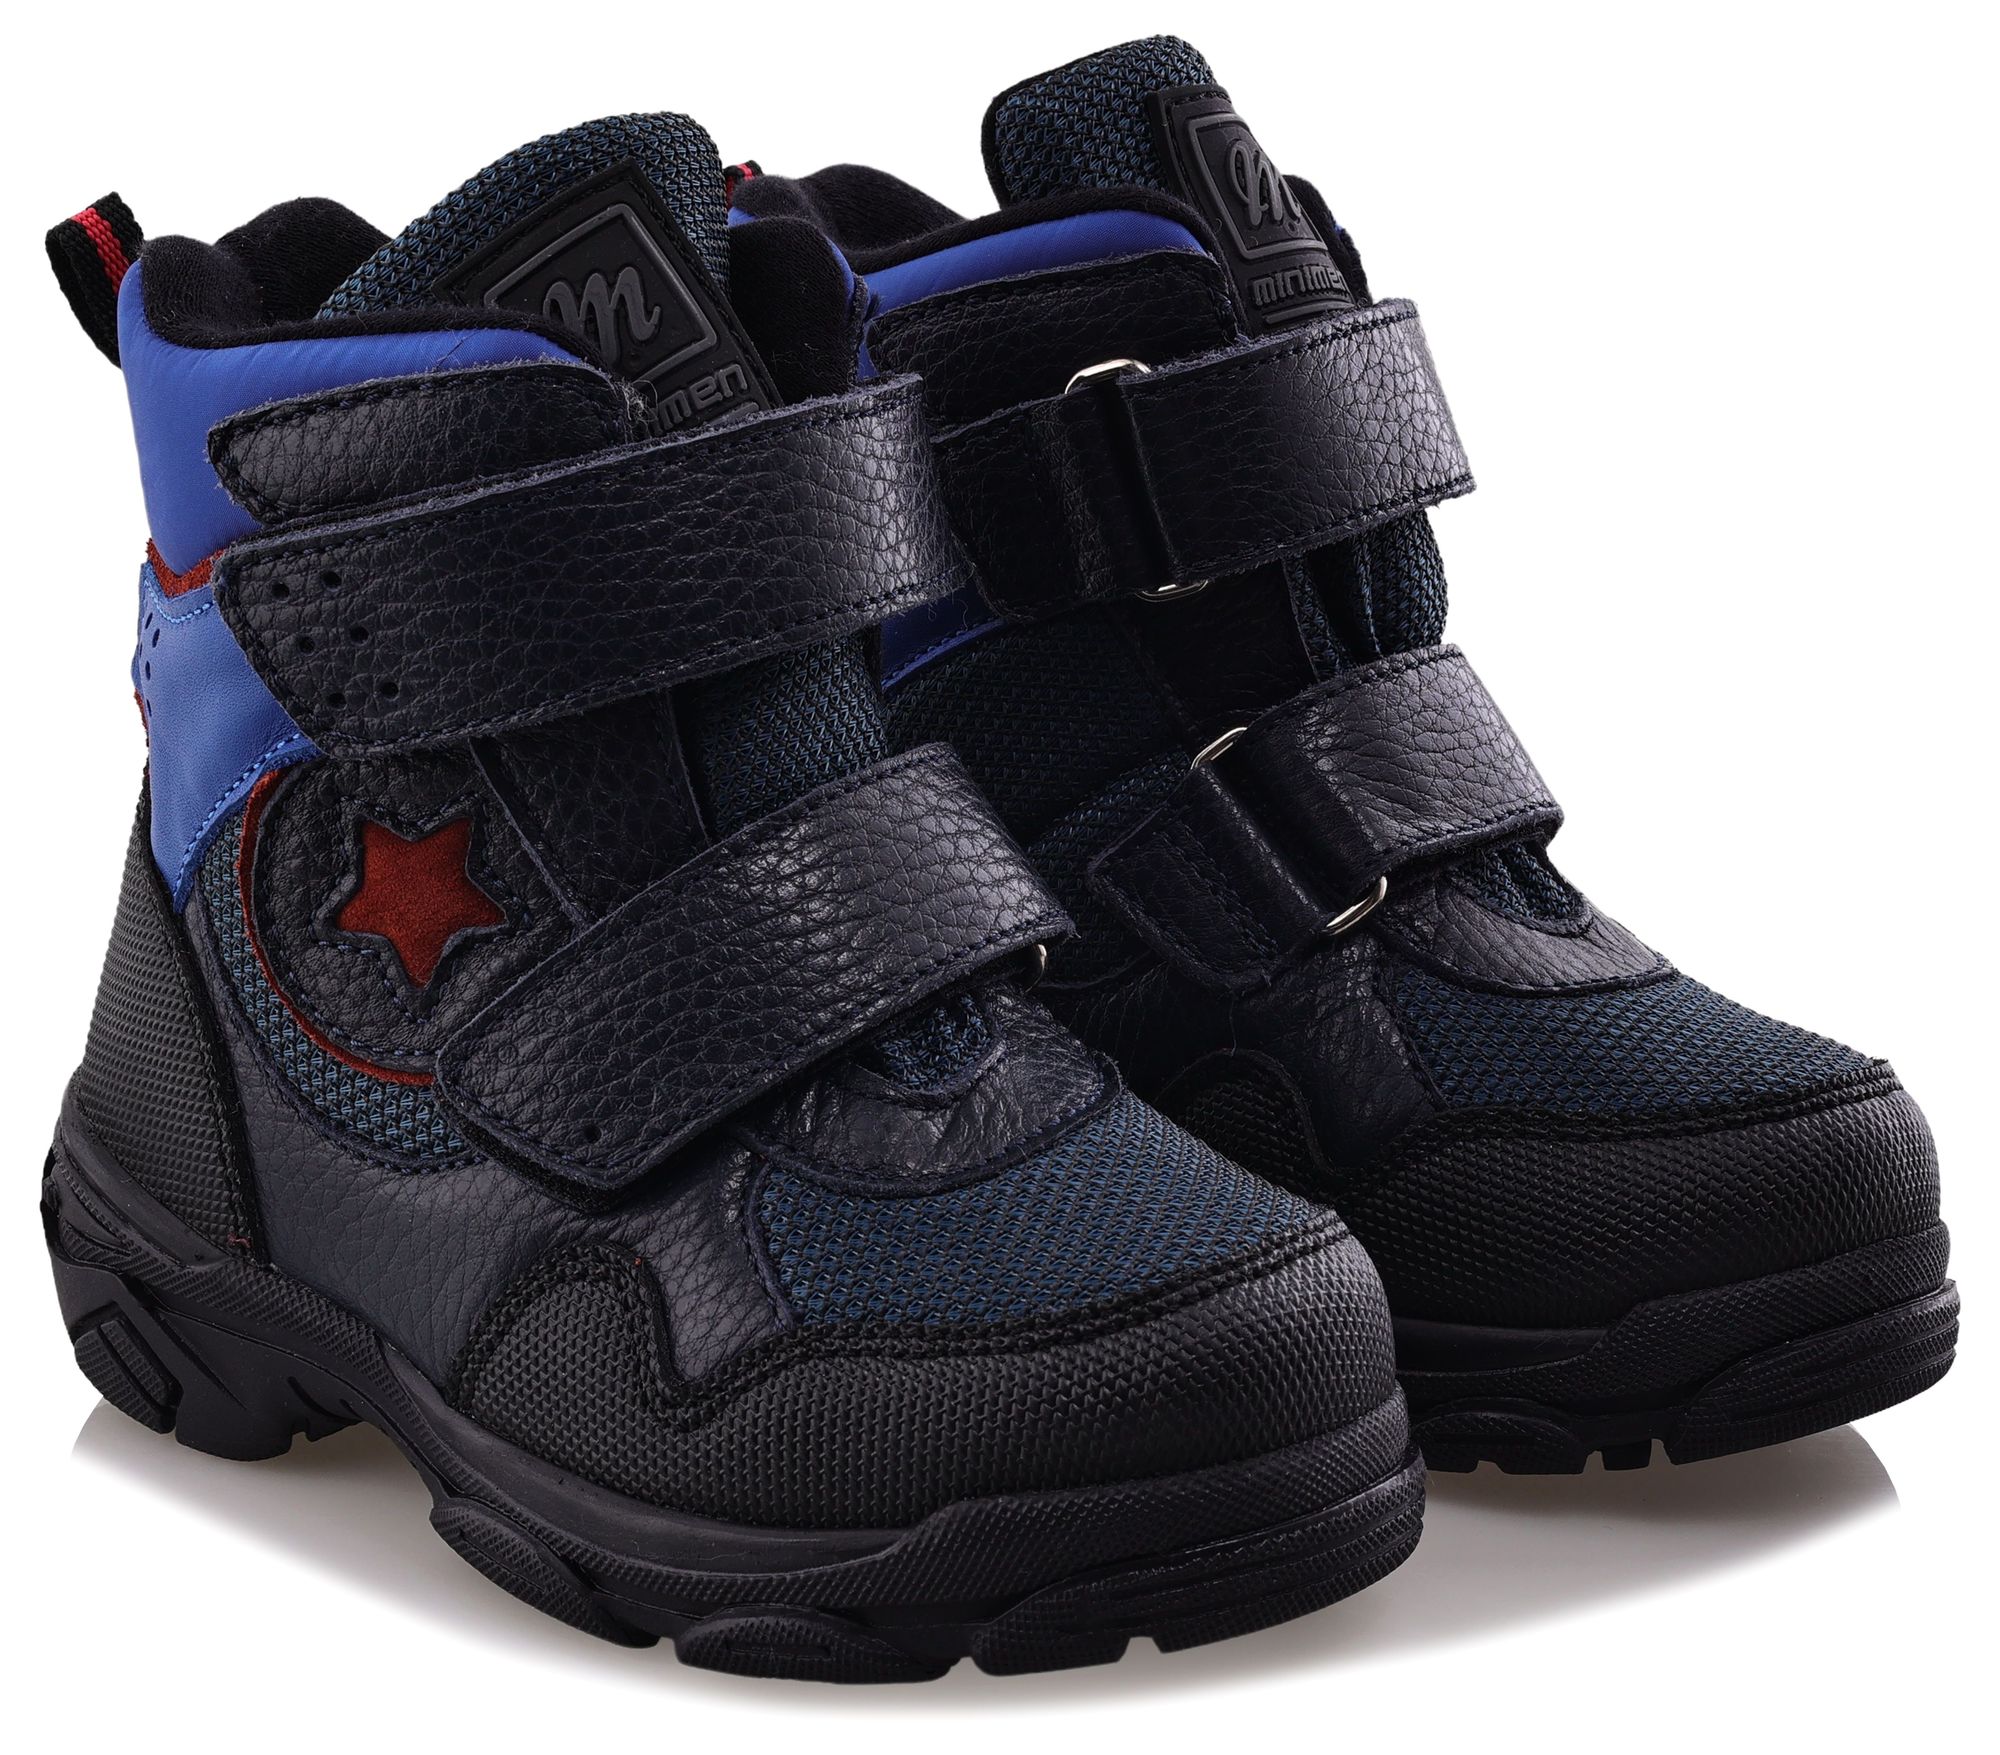 Ботинки Minimen для мальчиков, тёмно-синие, размер 24, 2658-52-23B-01 ботинки minimen для девочек сиреневые размер 30 2658 63 23b 04